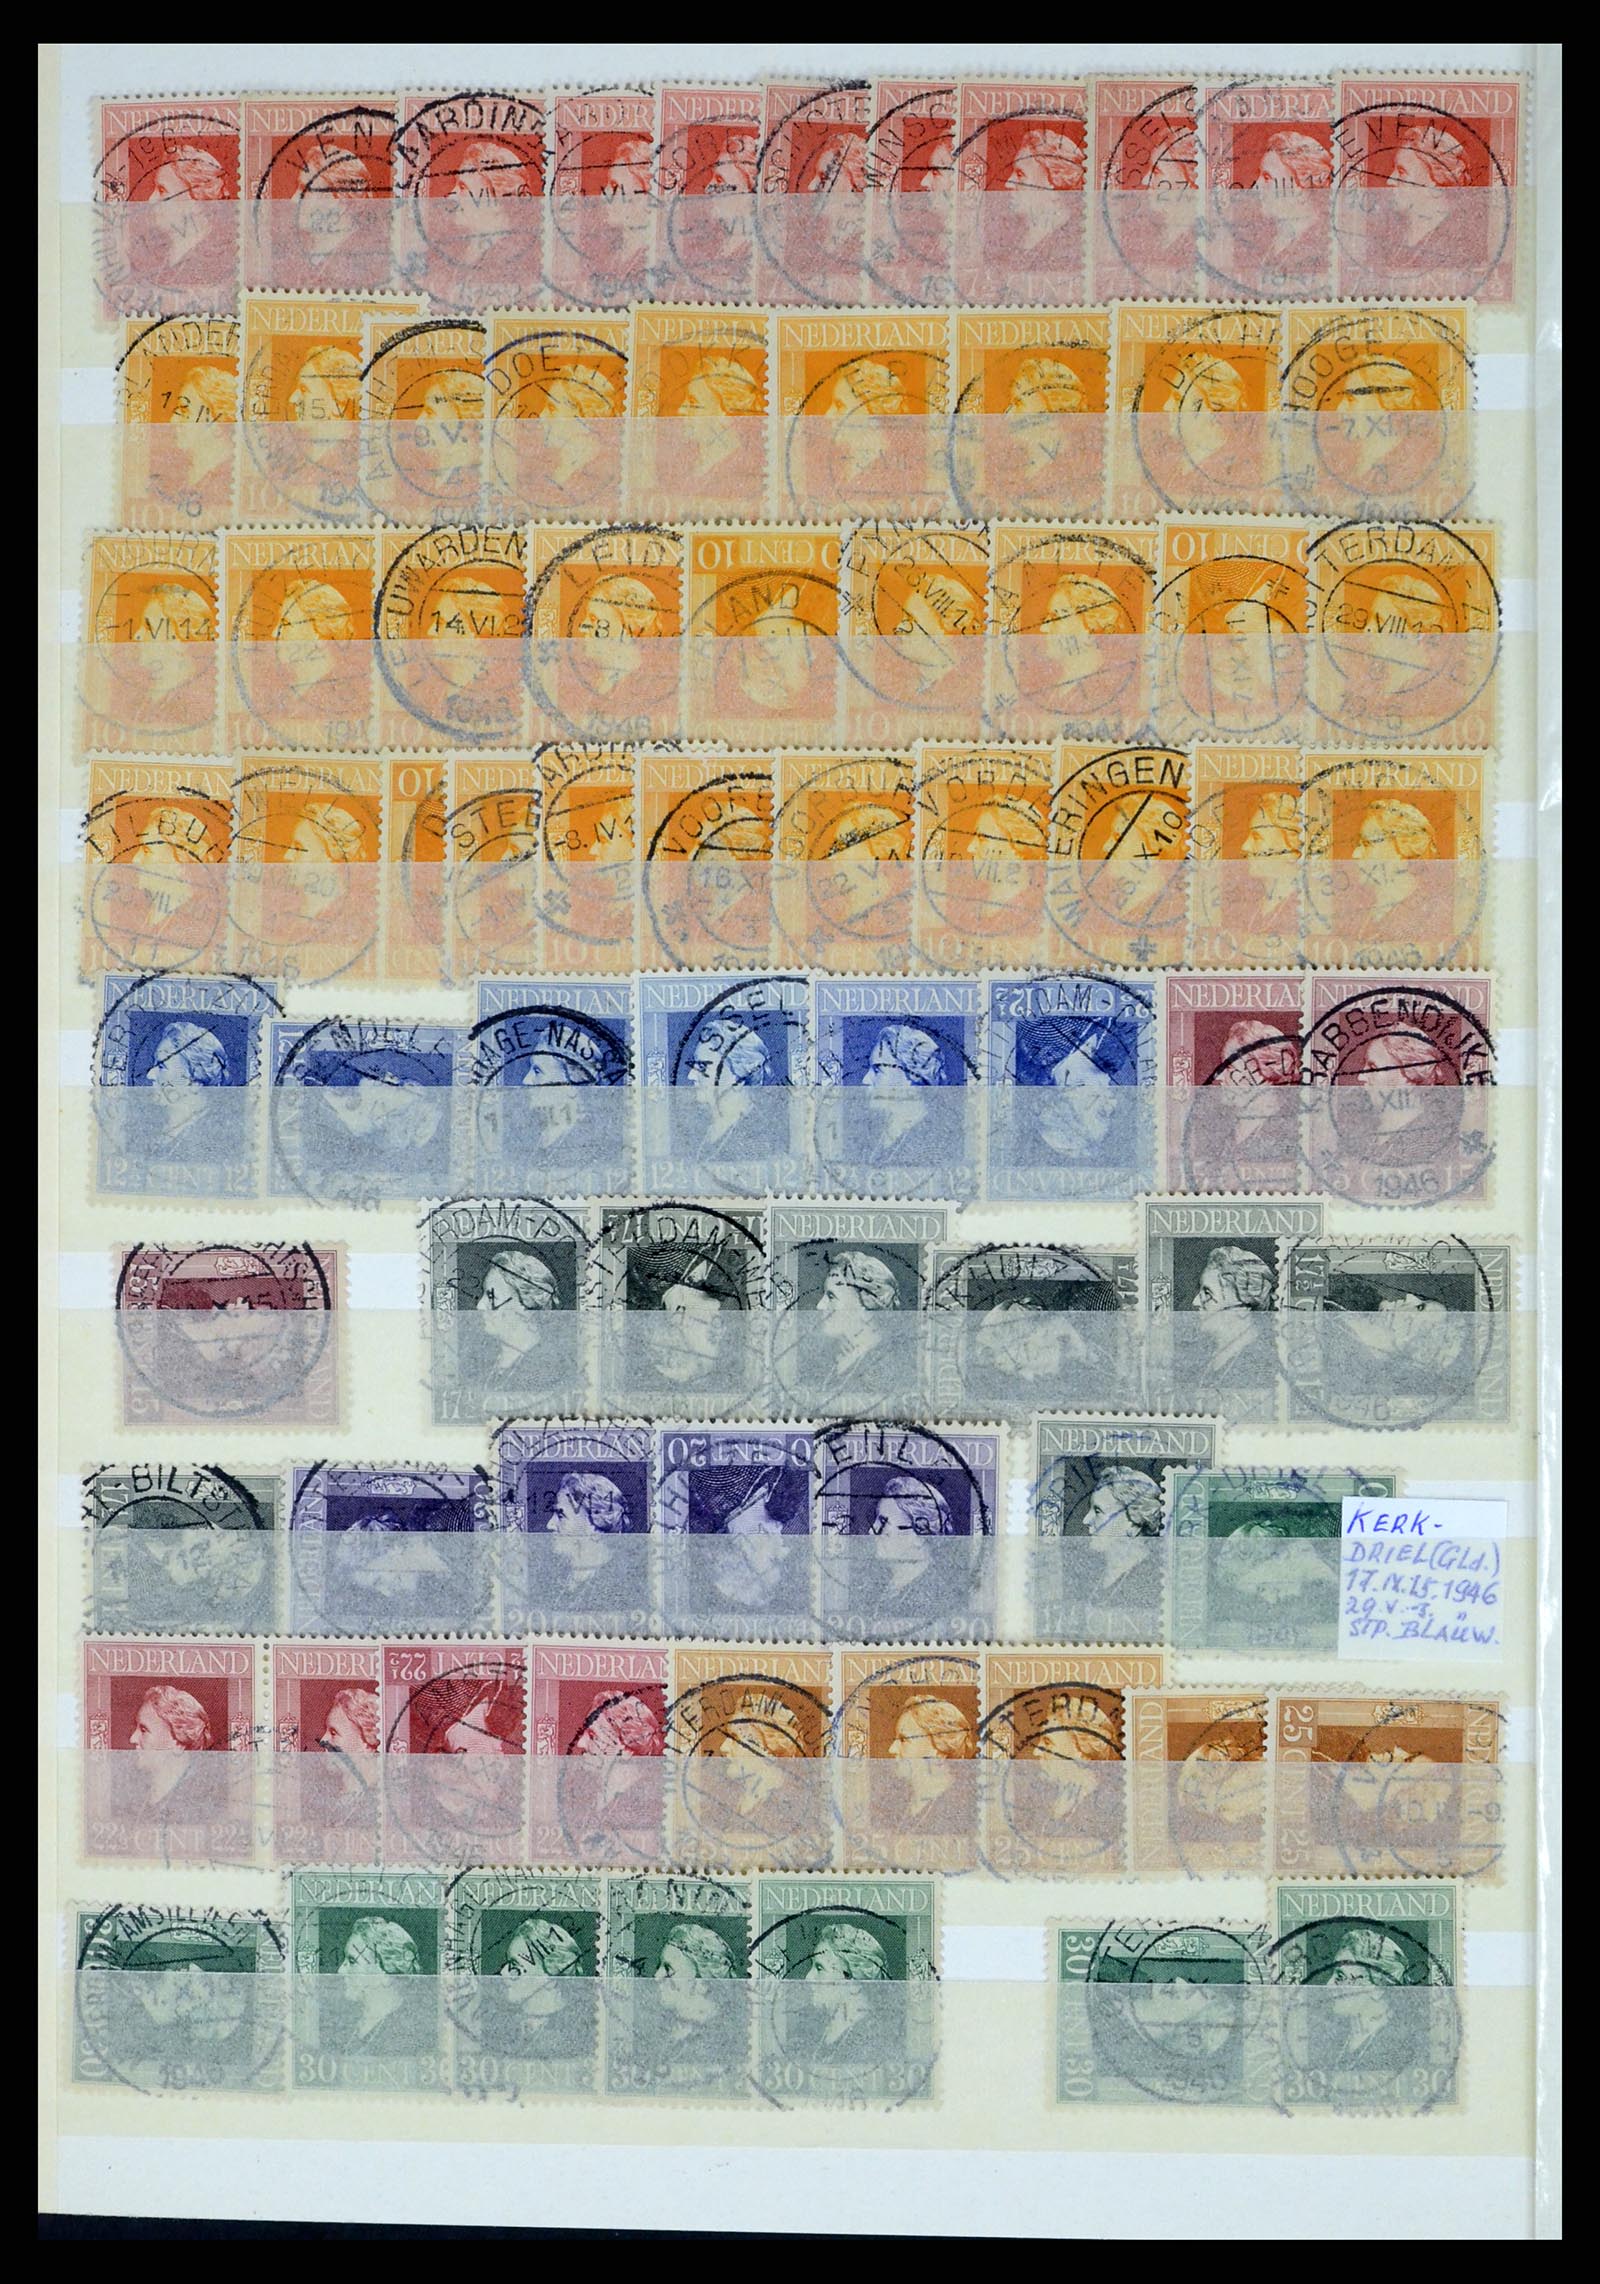 37424 040 - Stamp collection 37424 Netherlands shortbar cancels.